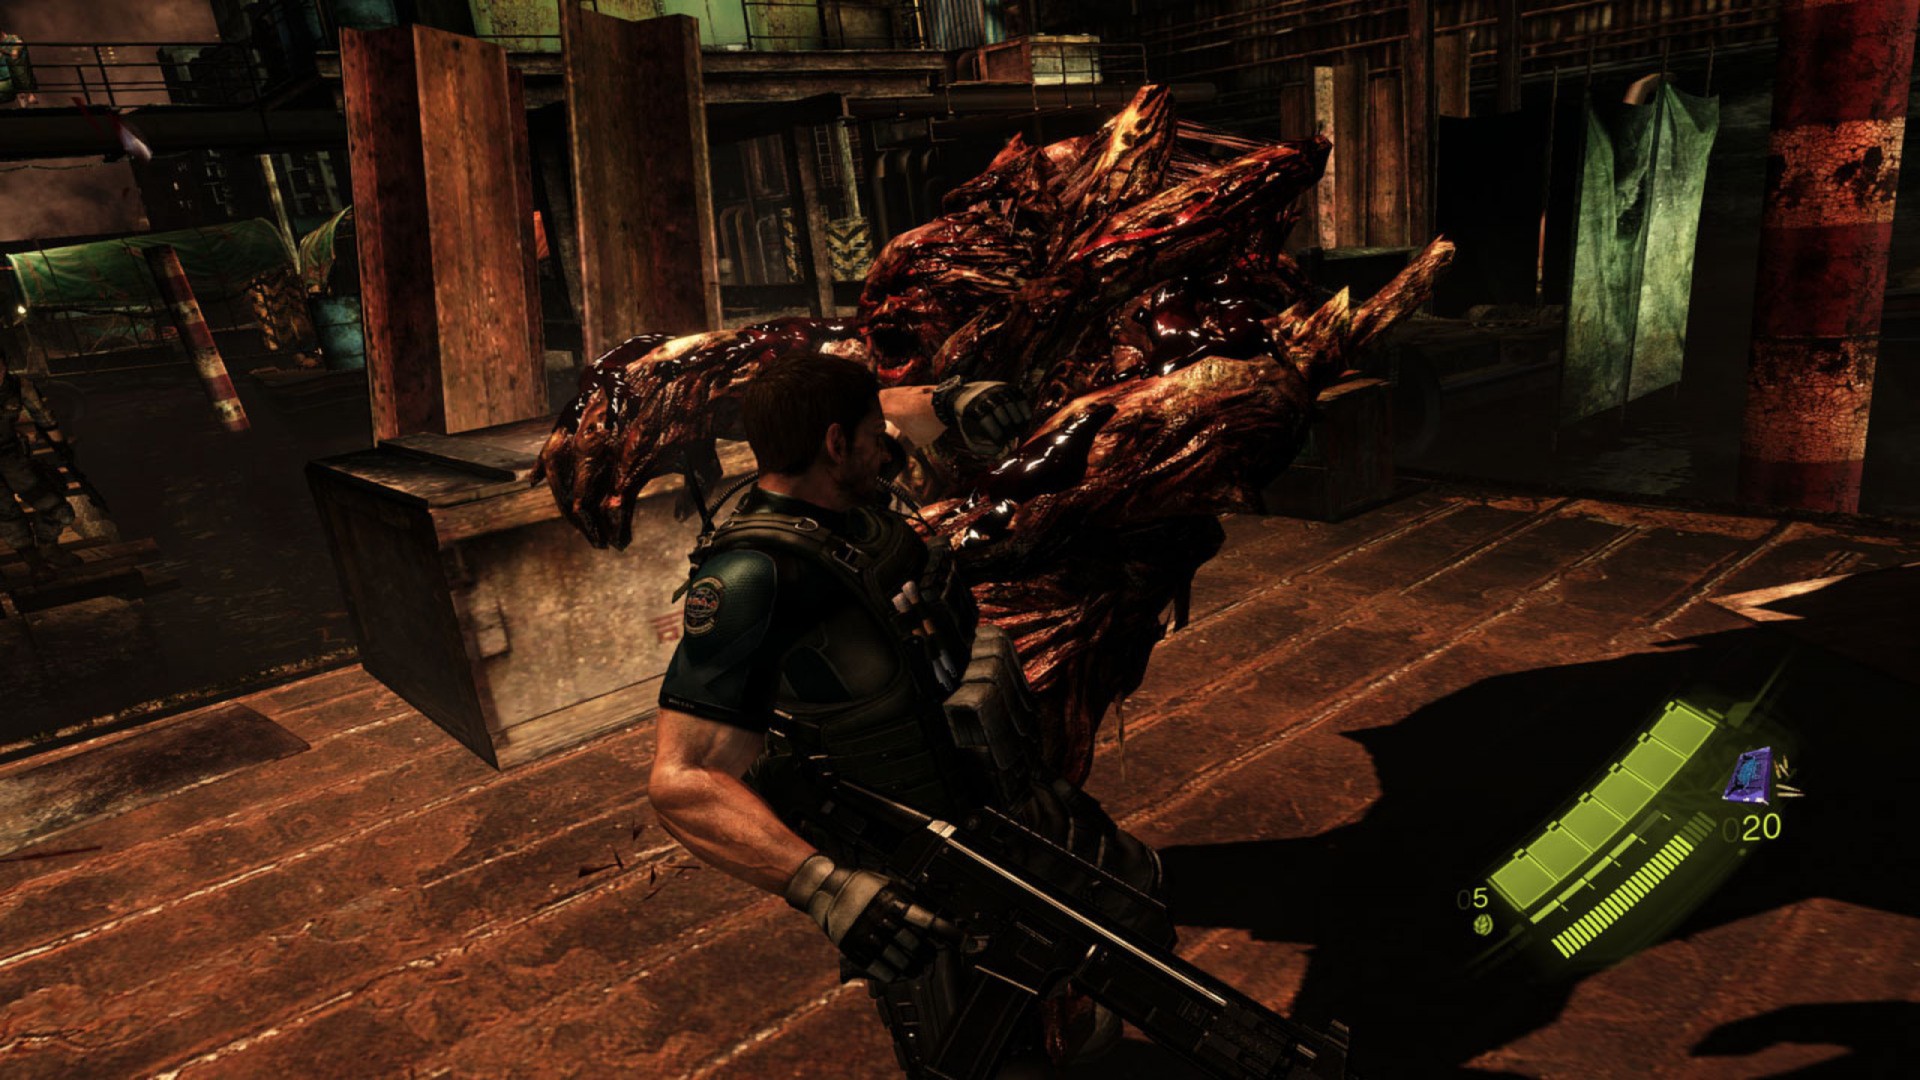 Save 75% on Resident Evil 6 on Steam